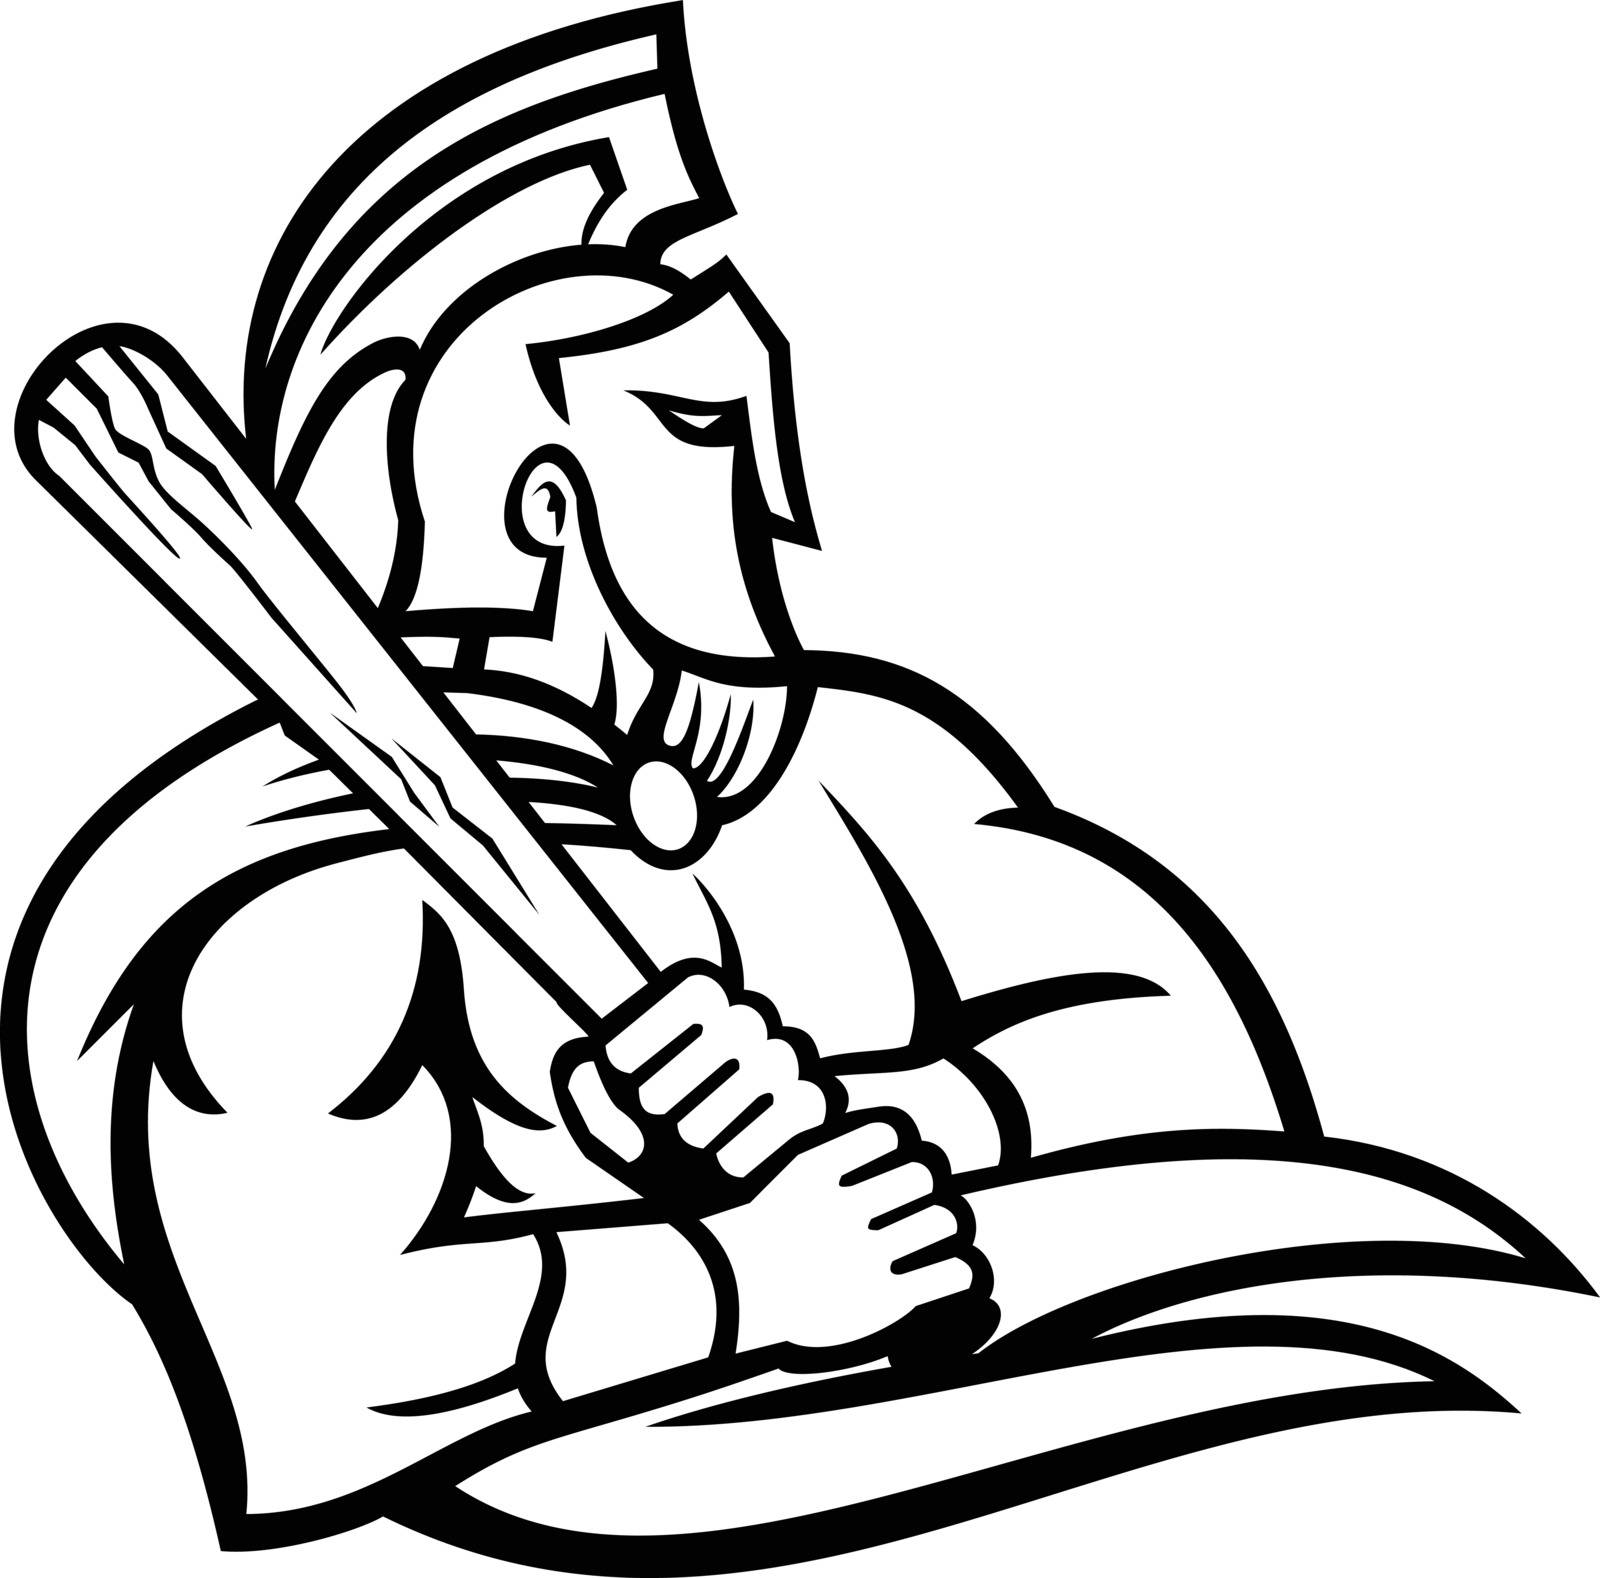 Spartan or Trojan Warrior With Baseball Bat Batting Mascot Black and White by patrimonio